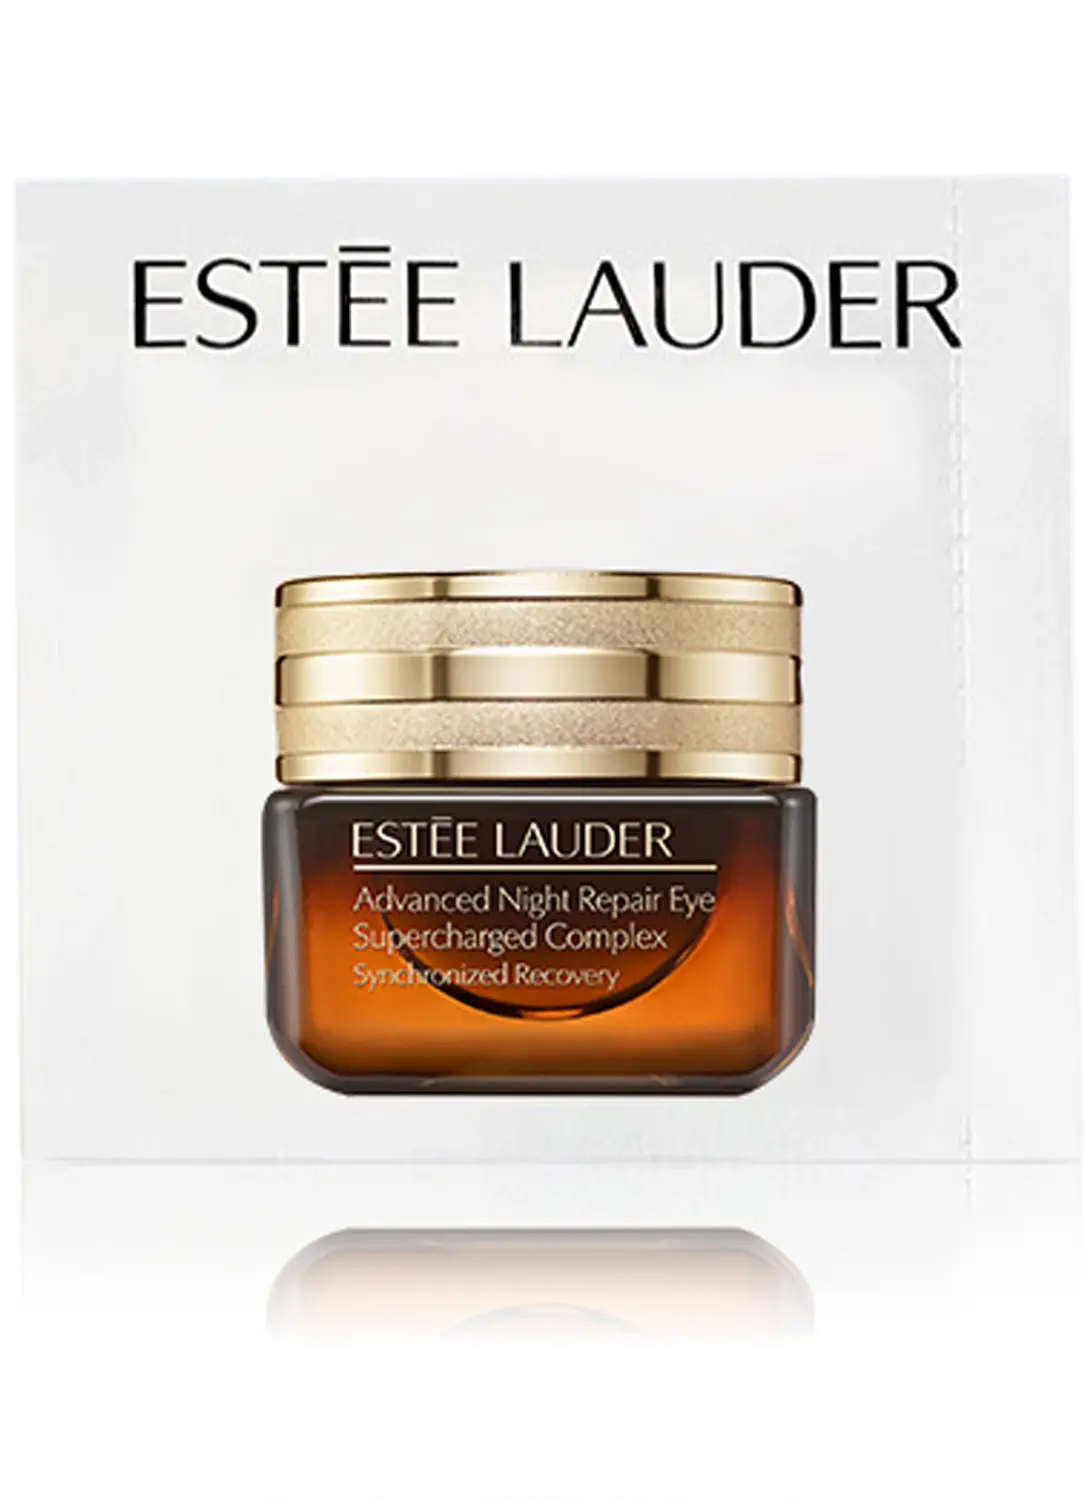 Estee Lauder Anr Eye Supercharged Complex (0.5 ml)